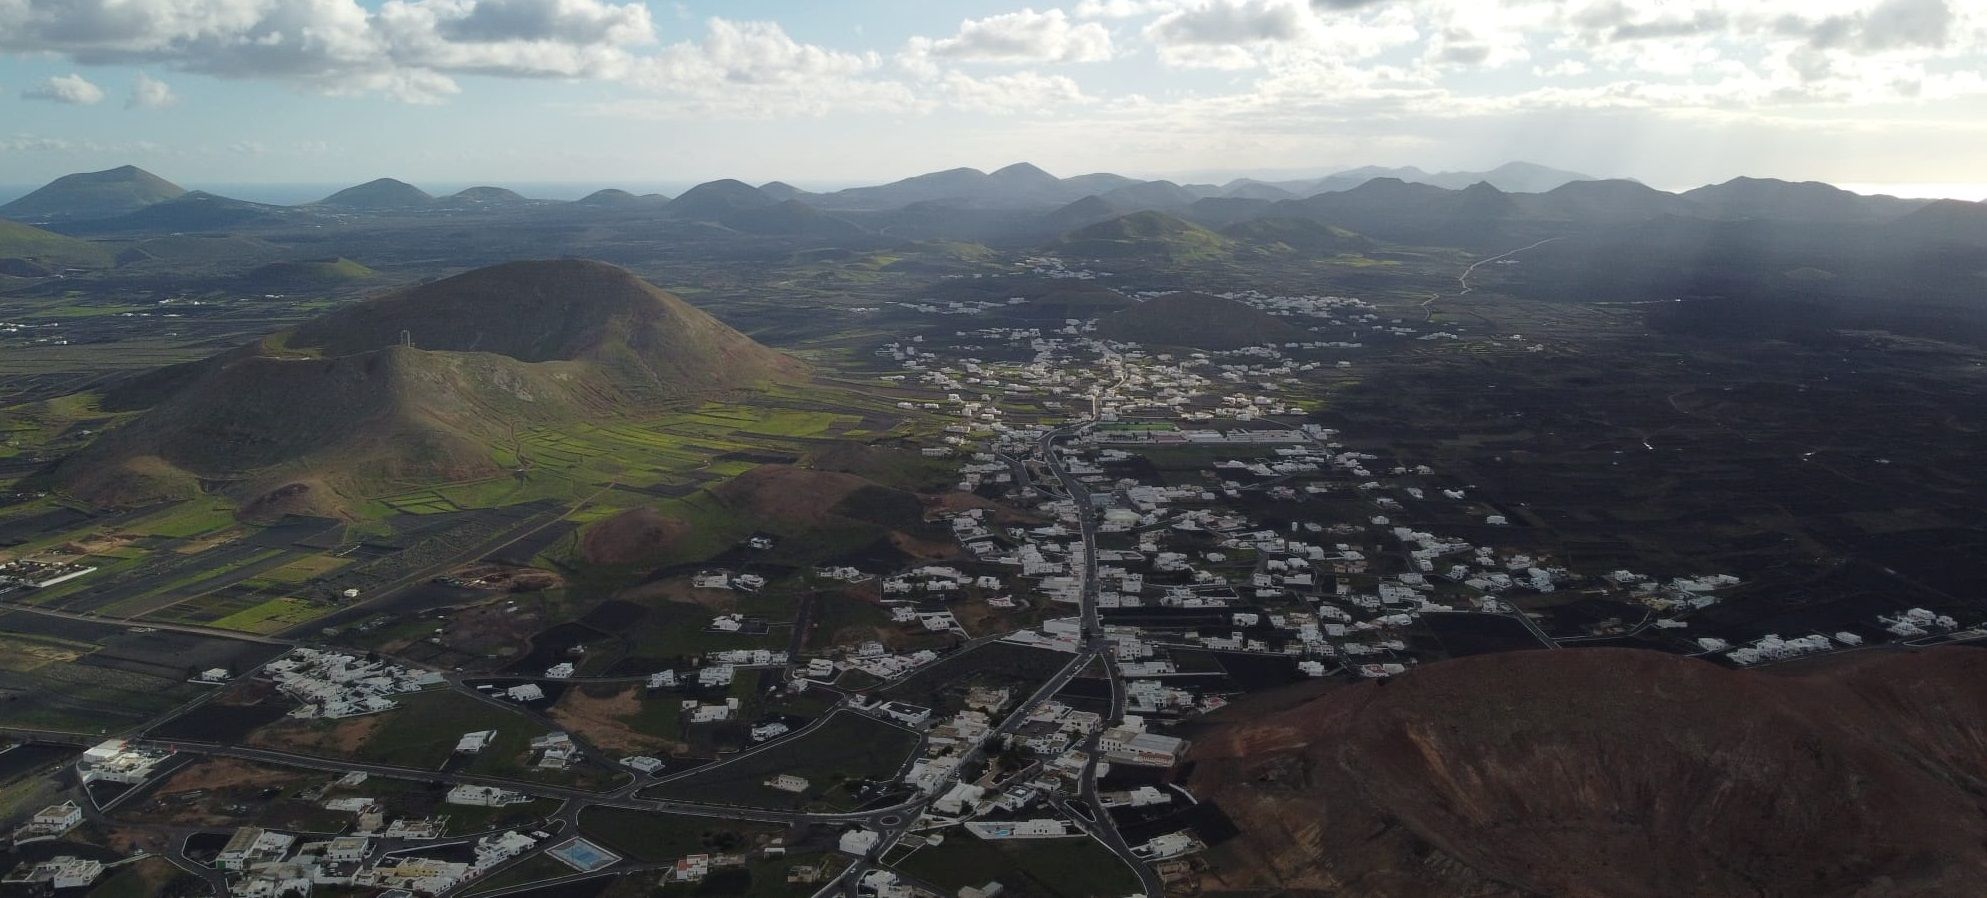 Imagen aérea del municipio de Tinajo